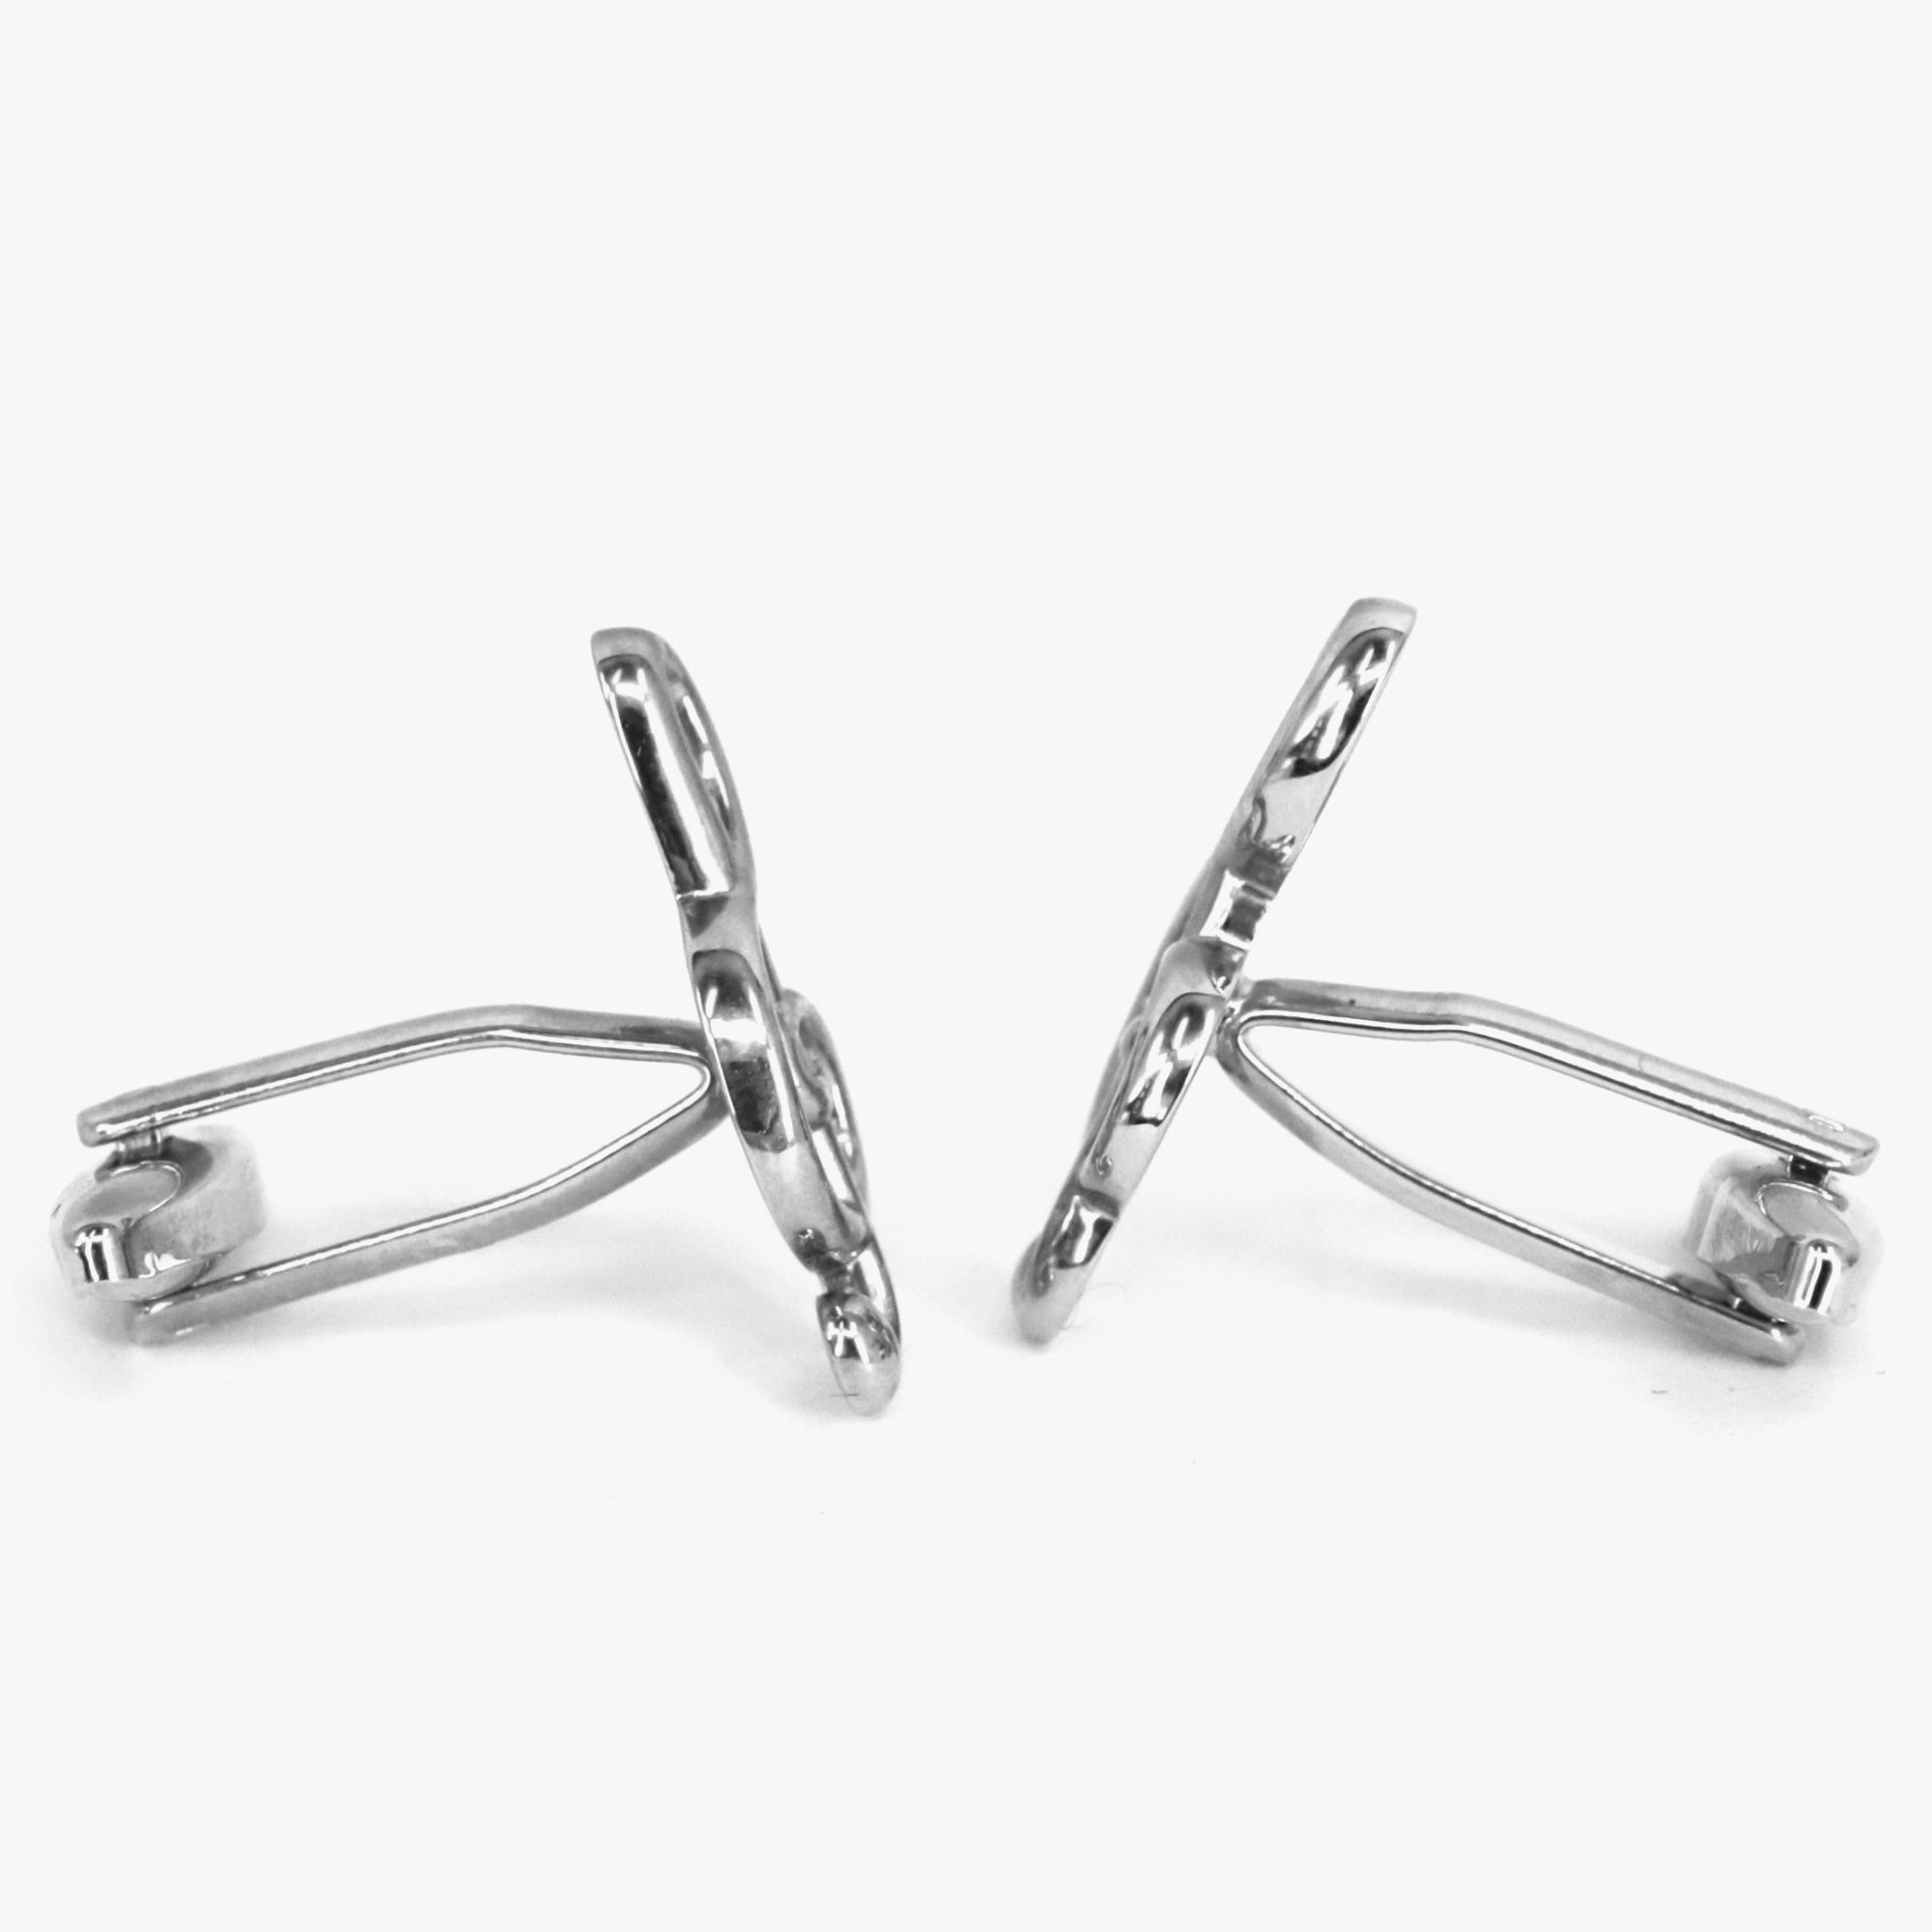 Marzthomson Musical Knot Cufflinks in Silver